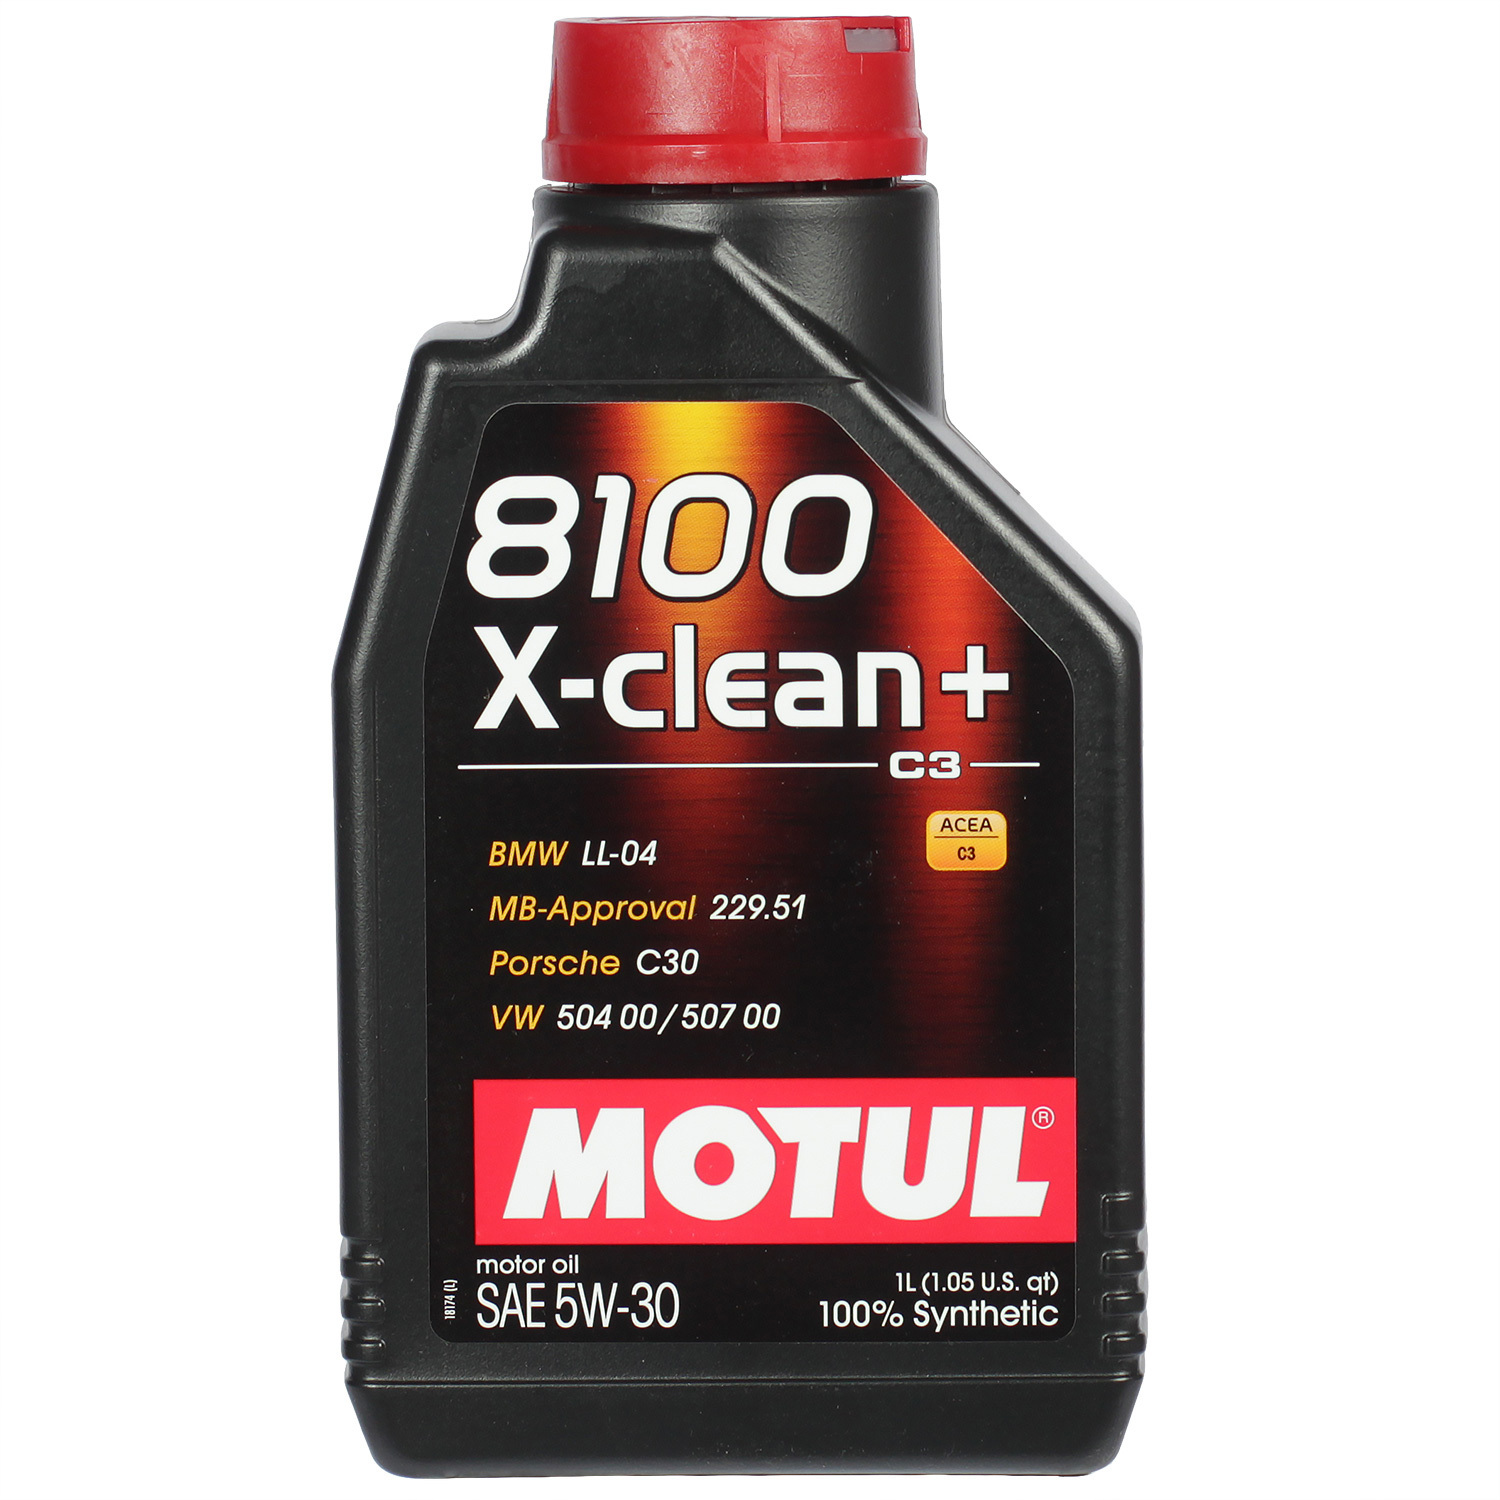 Motul Моторное масло Motul 8100 X-clean+ 5W-30, 1 л цена и фото